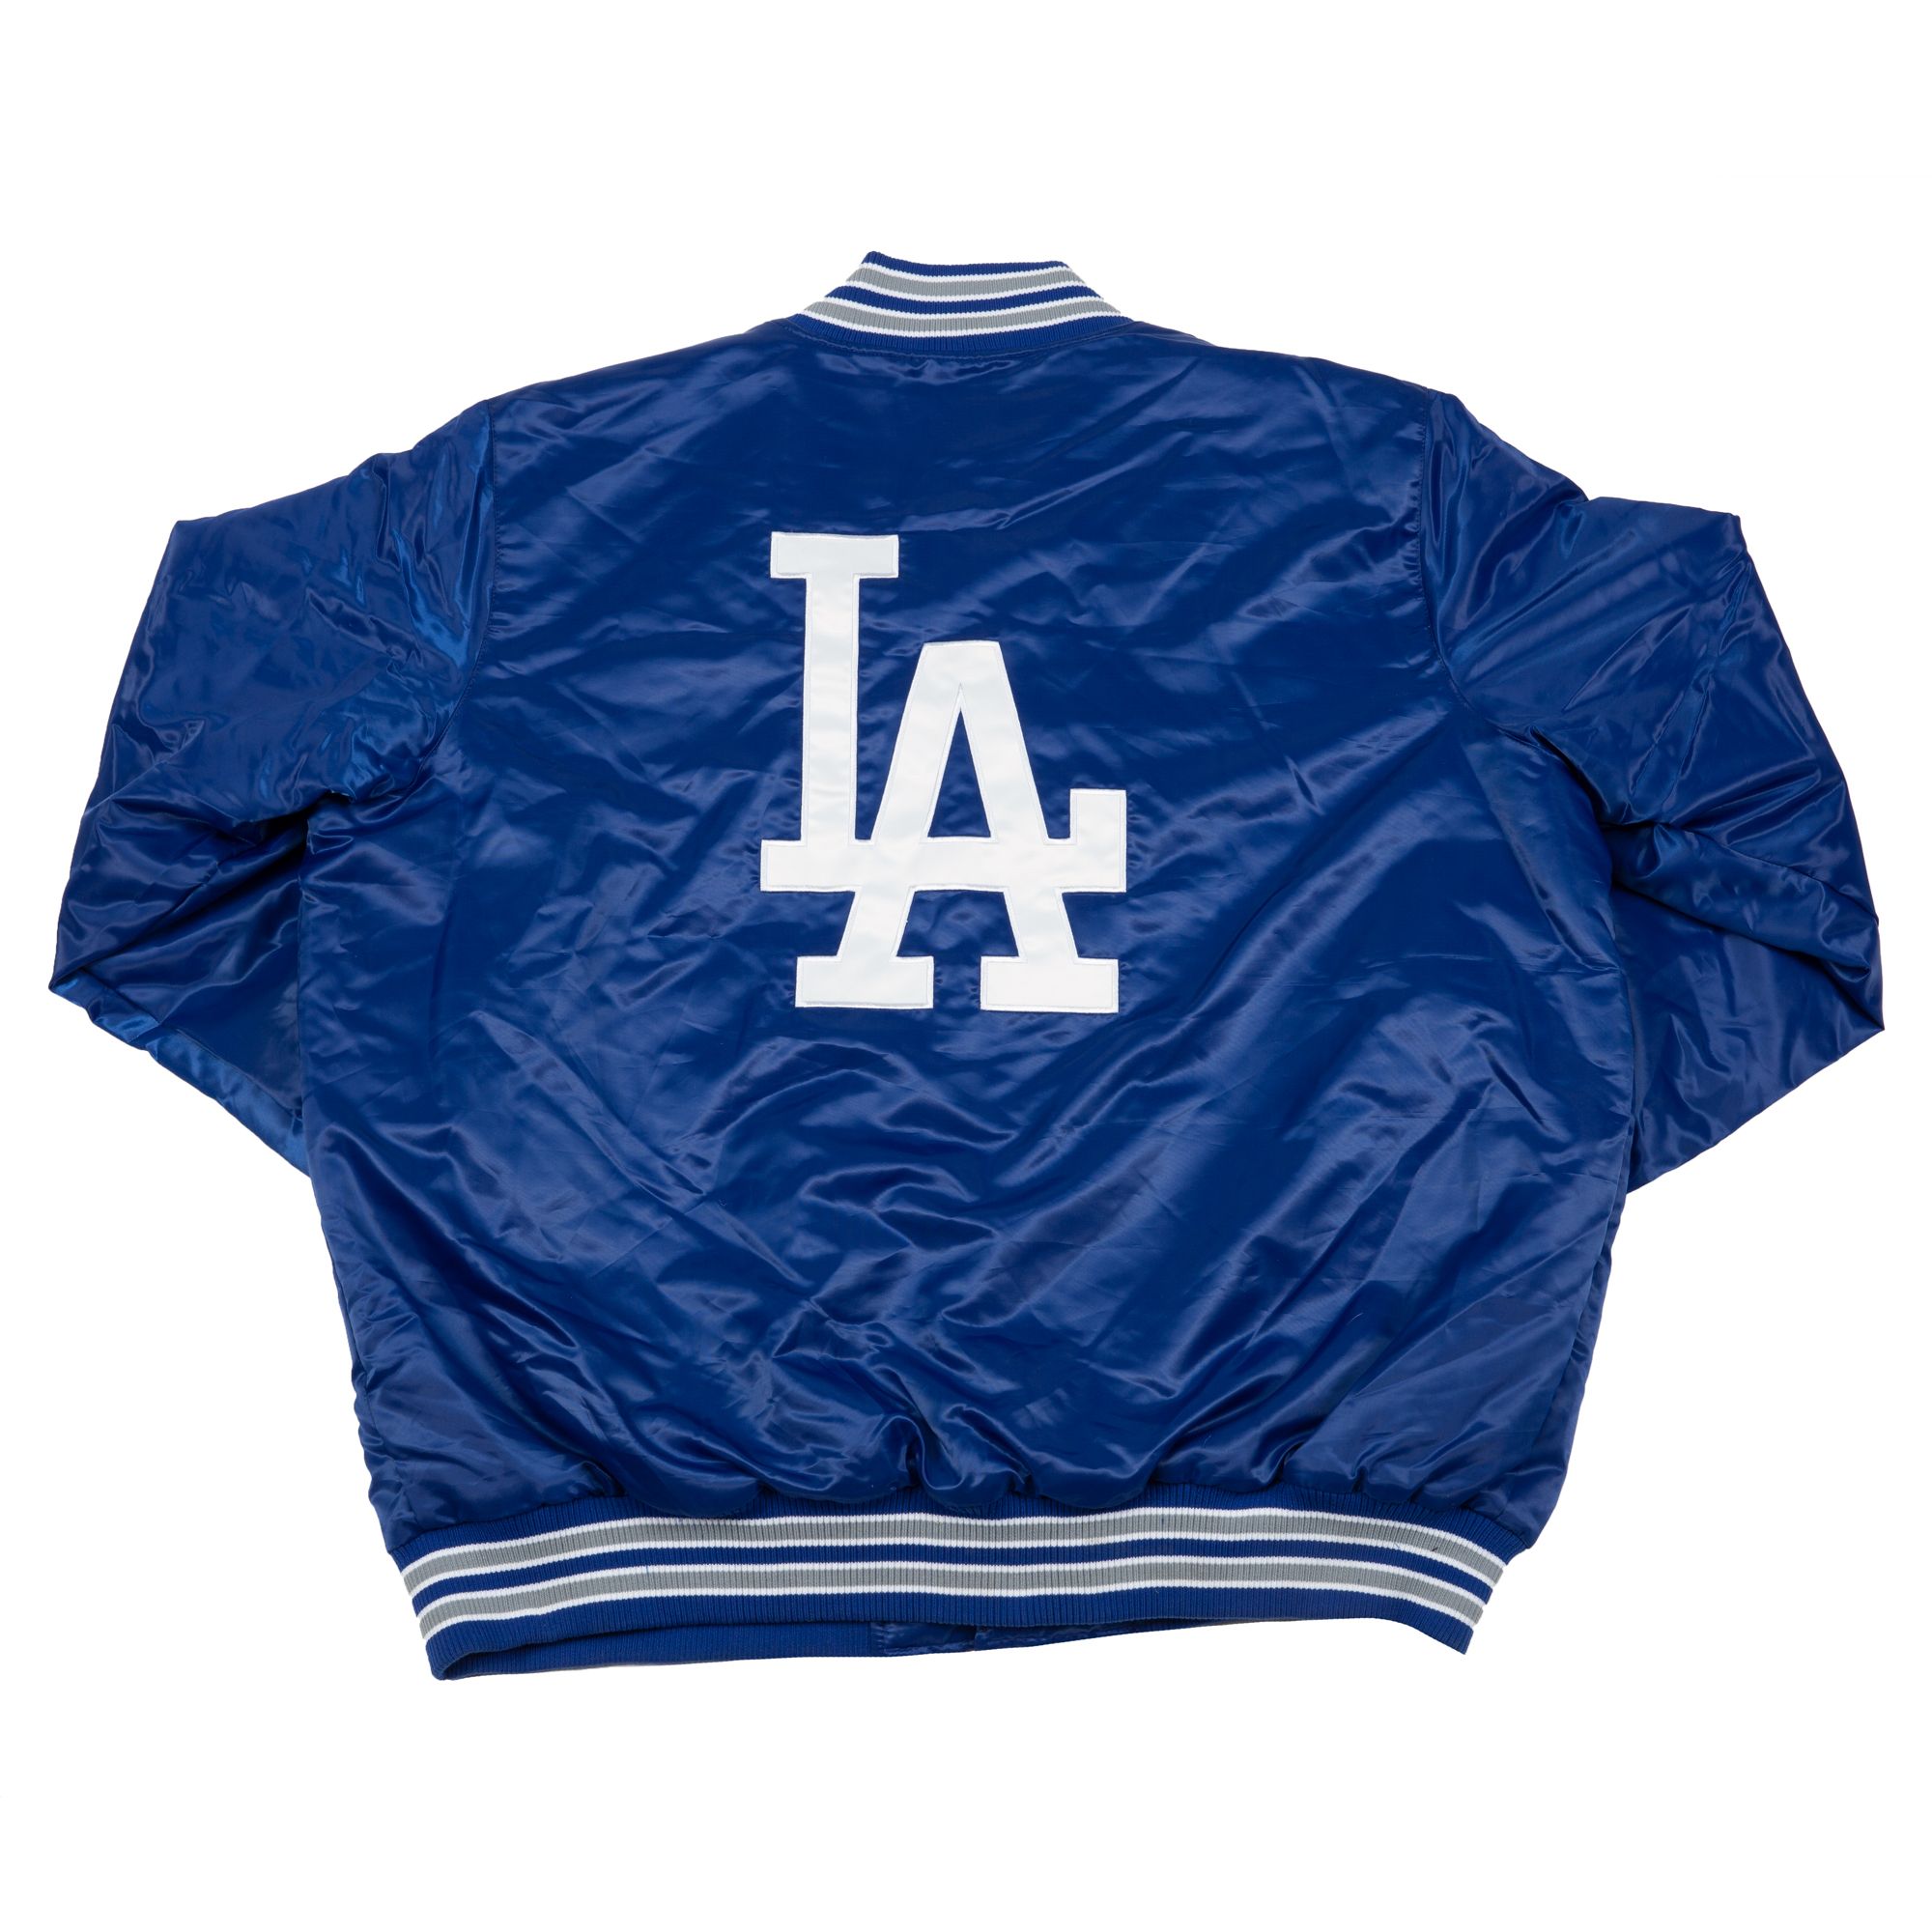 STARTER Los Angeles Dodgers Varsity Jacket LX850390LAD - Shiekh